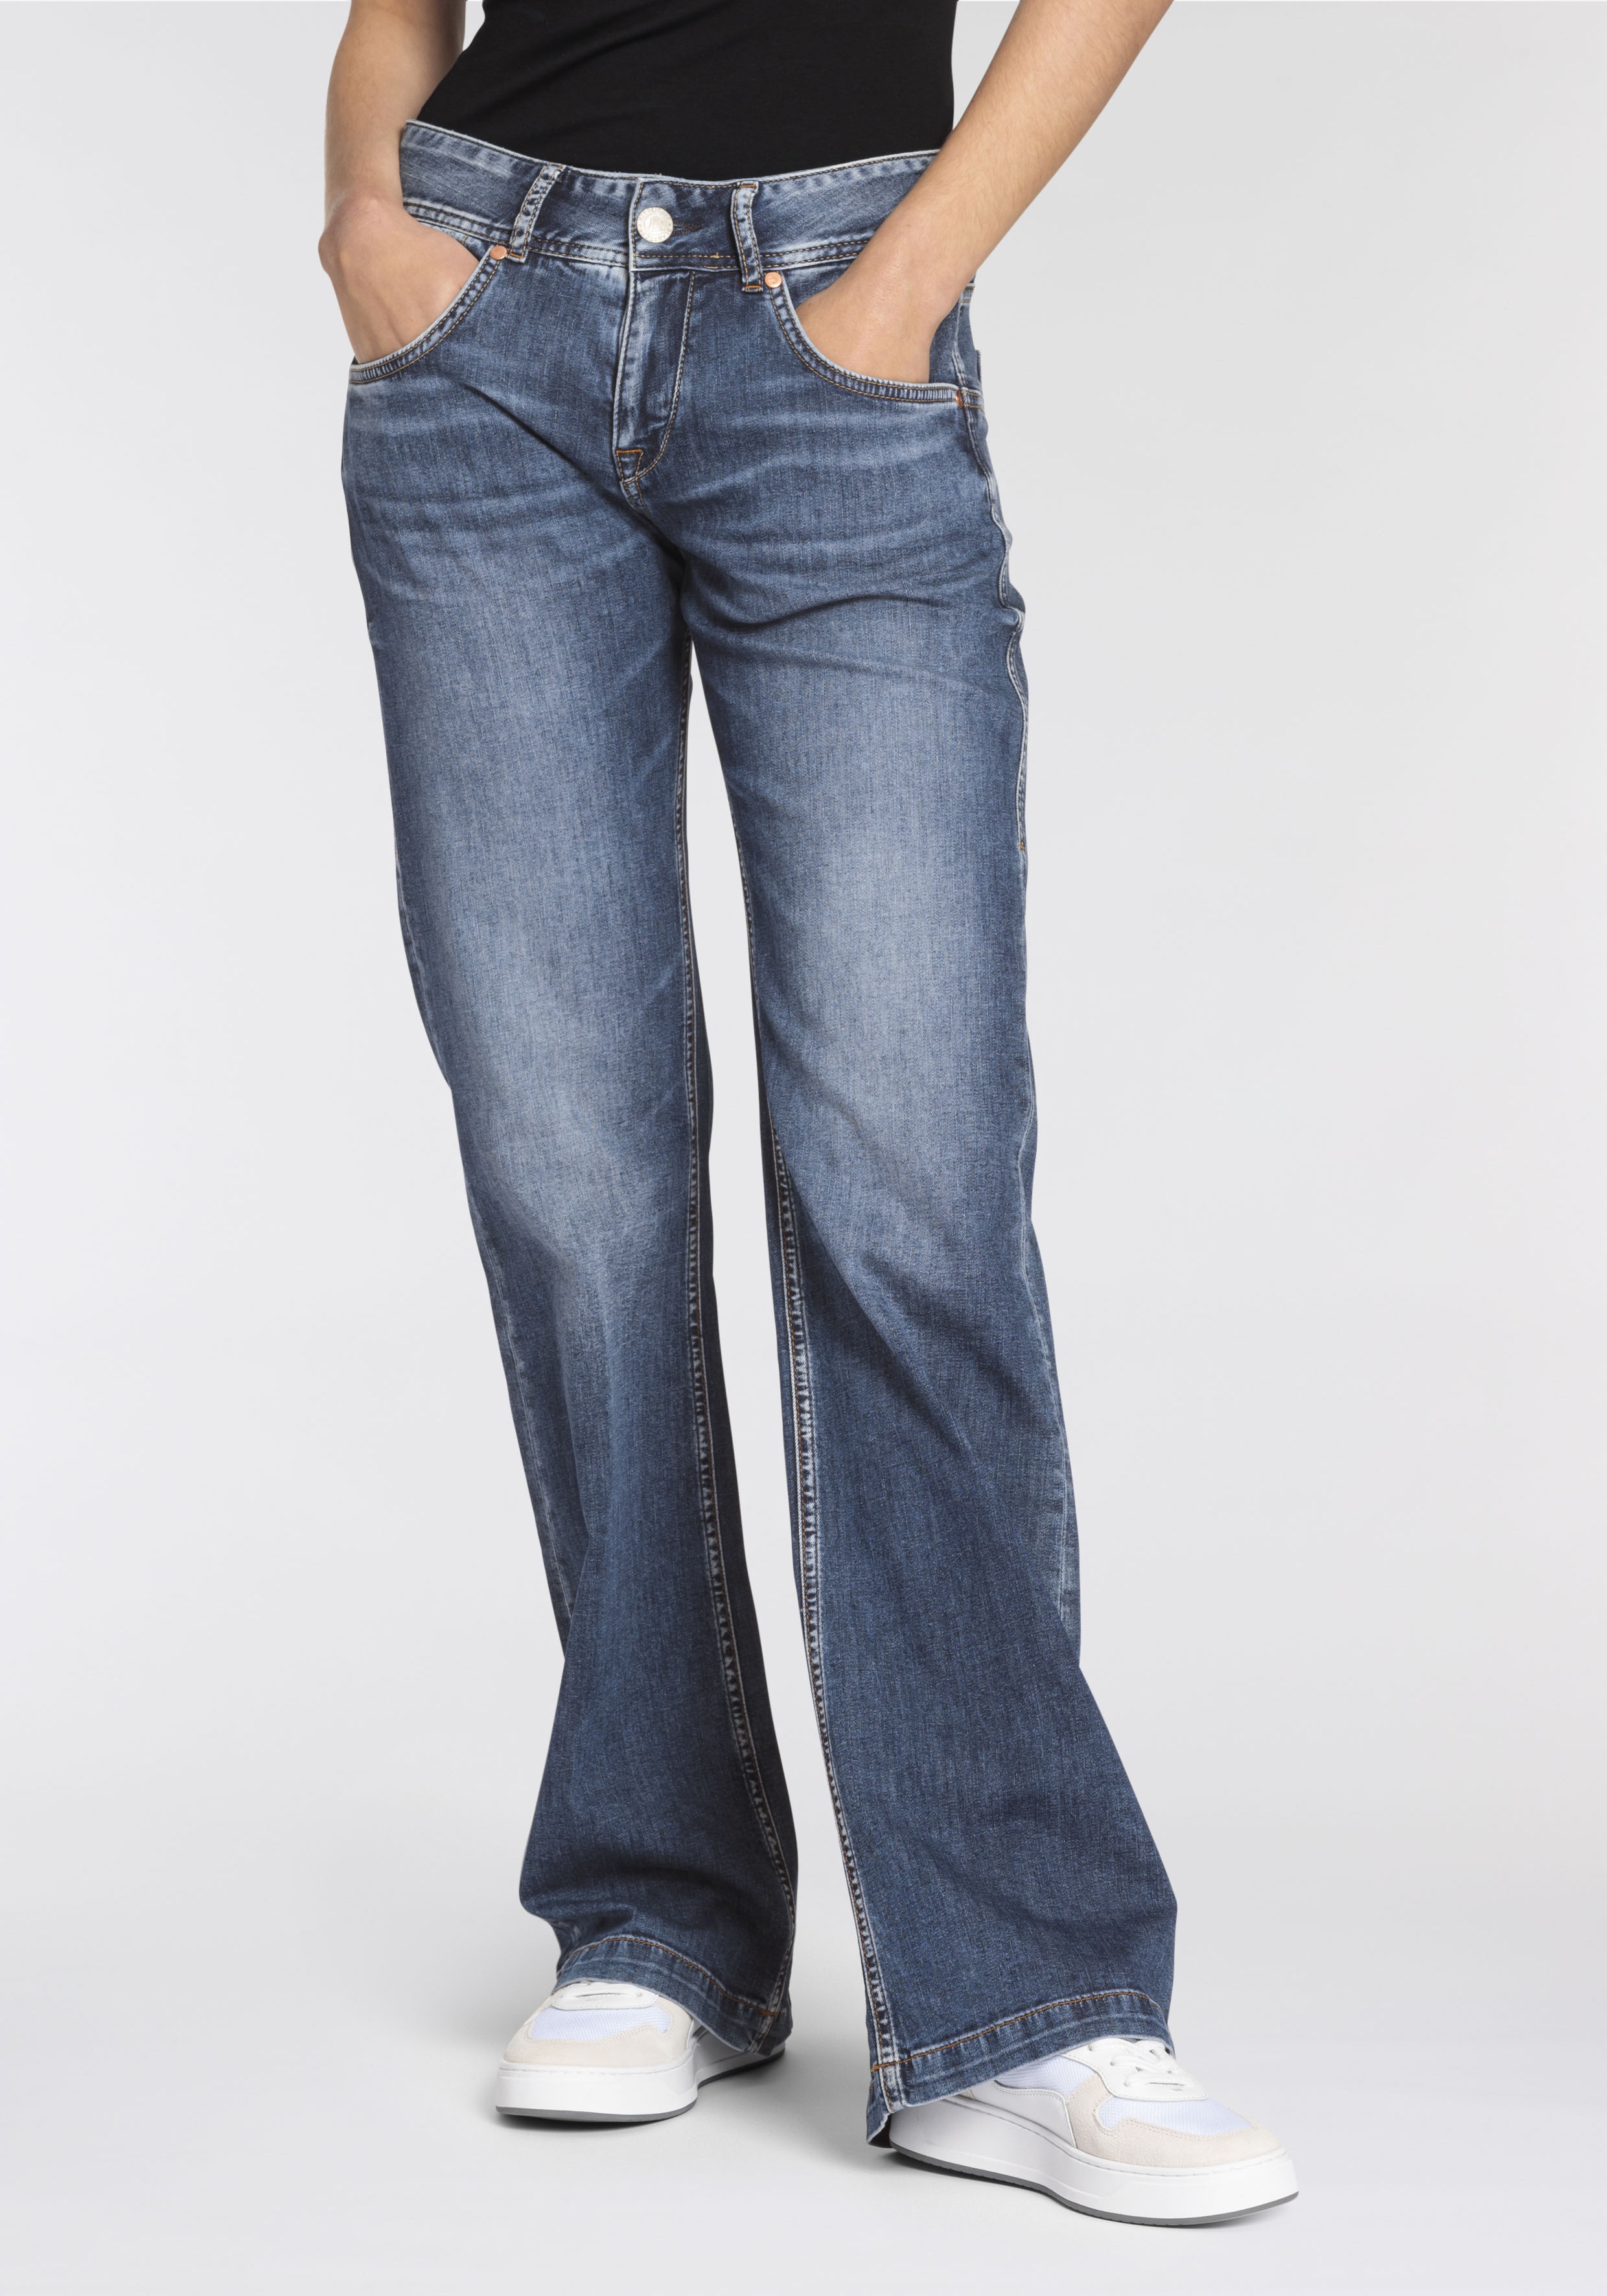 Bootcut-Jeans HERRLICHER "Edna Light Denim" Gr. 32, Länge 34, grau (dolphin) Damen Jeans Bootcut